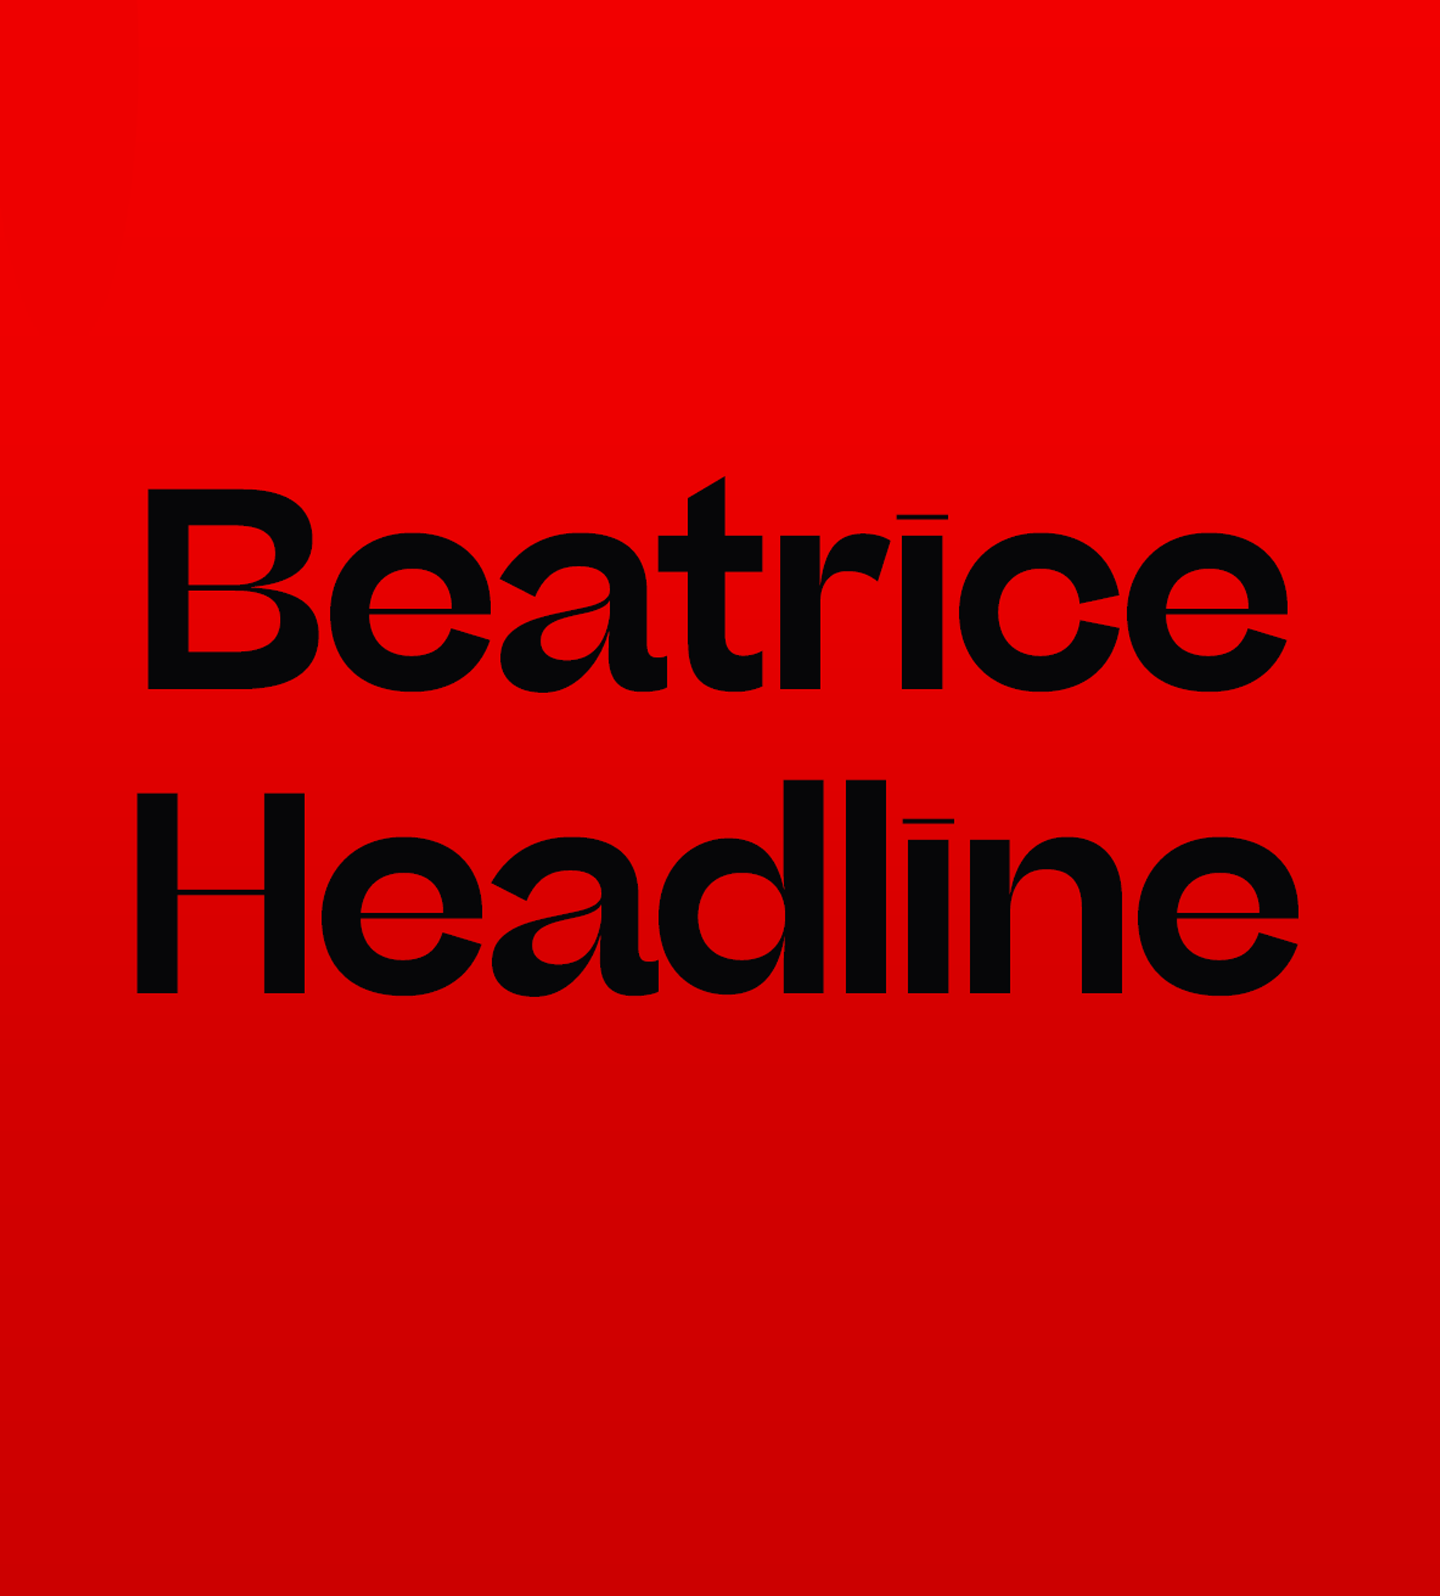 Beatrice Headline Semibold Italic Font preview